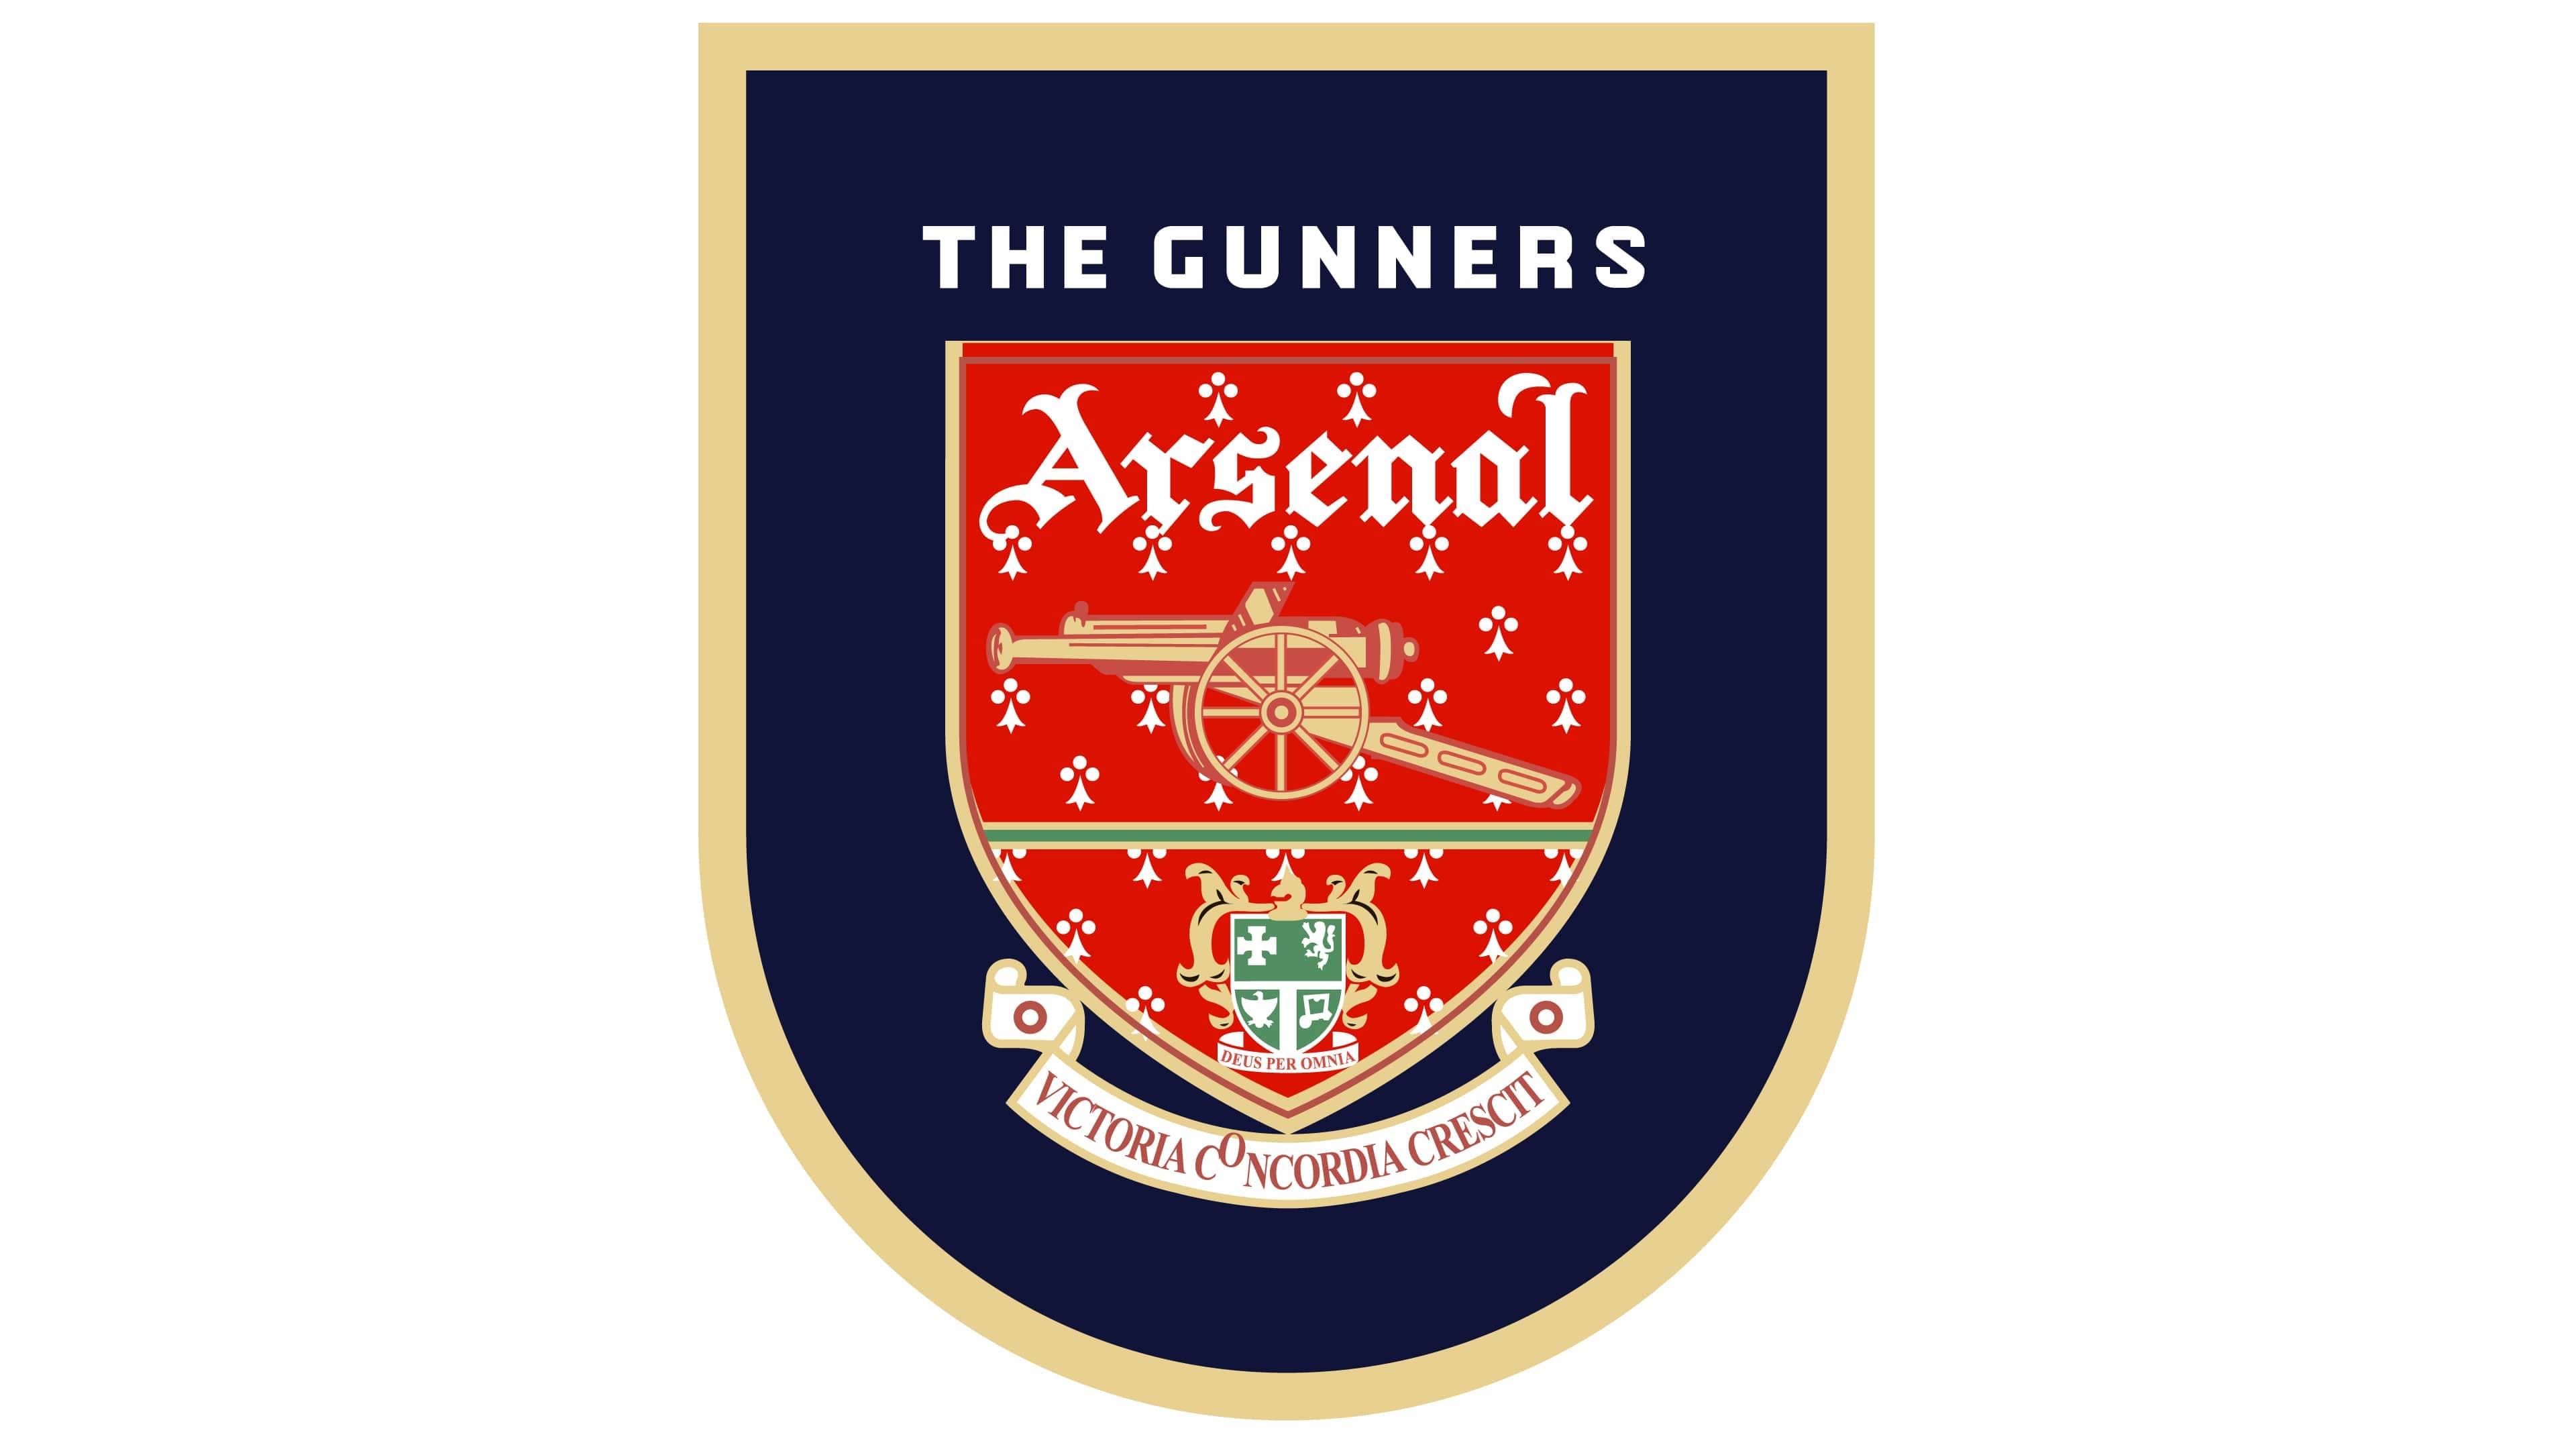 Arsenal Logo, symbol, meaning, history, PNG